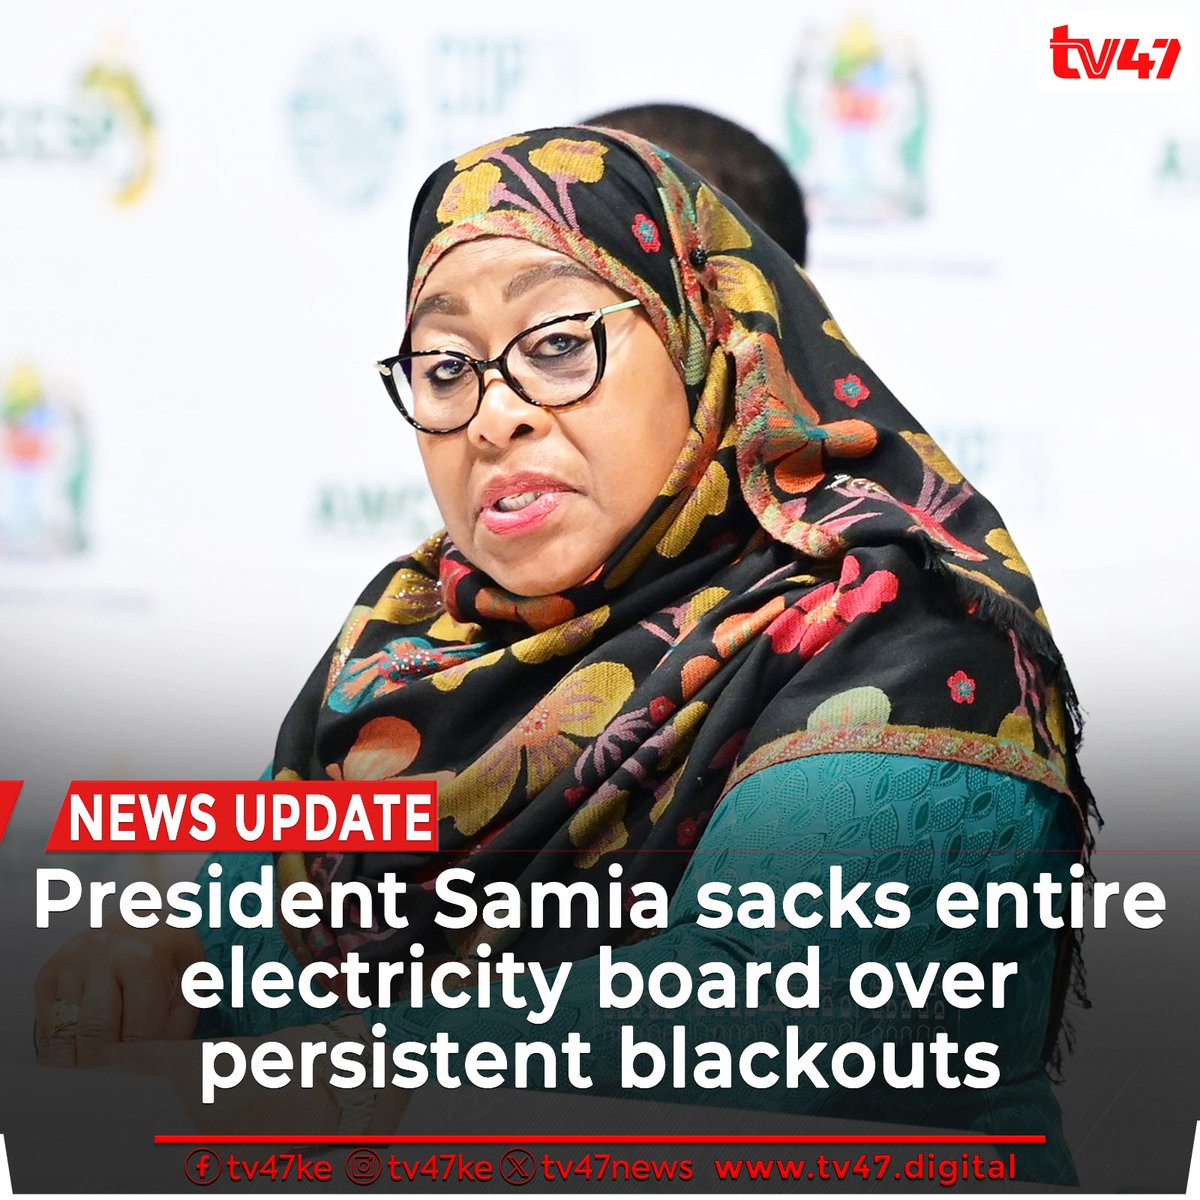 Tanzanian President Samia Suluhu sacks entire electricity board over persistent blackouts.

#TV47News